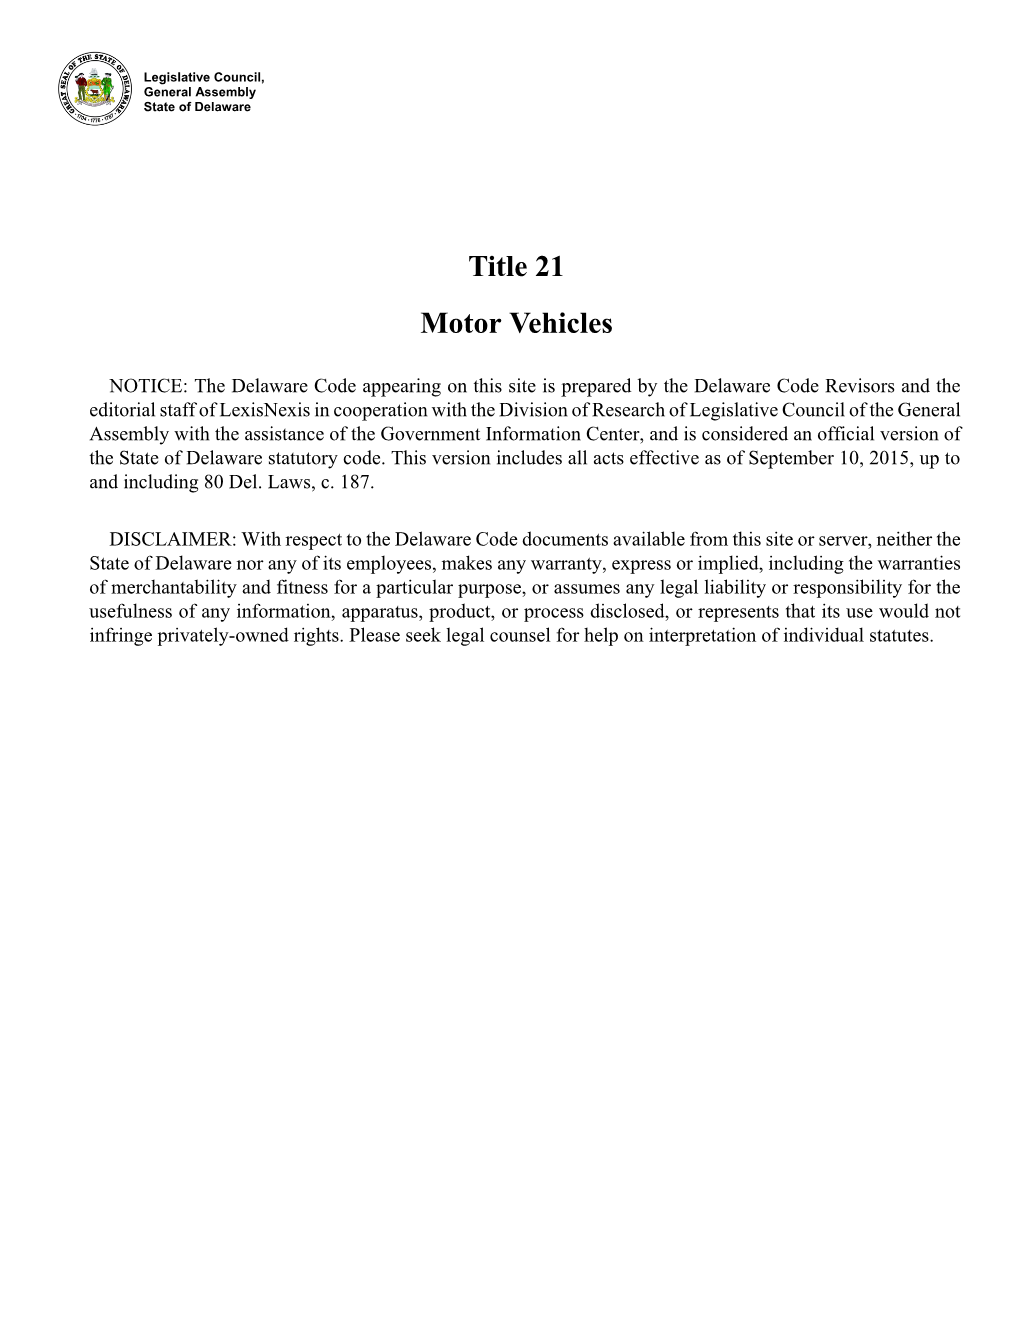 Title 21 Motor Vehicles